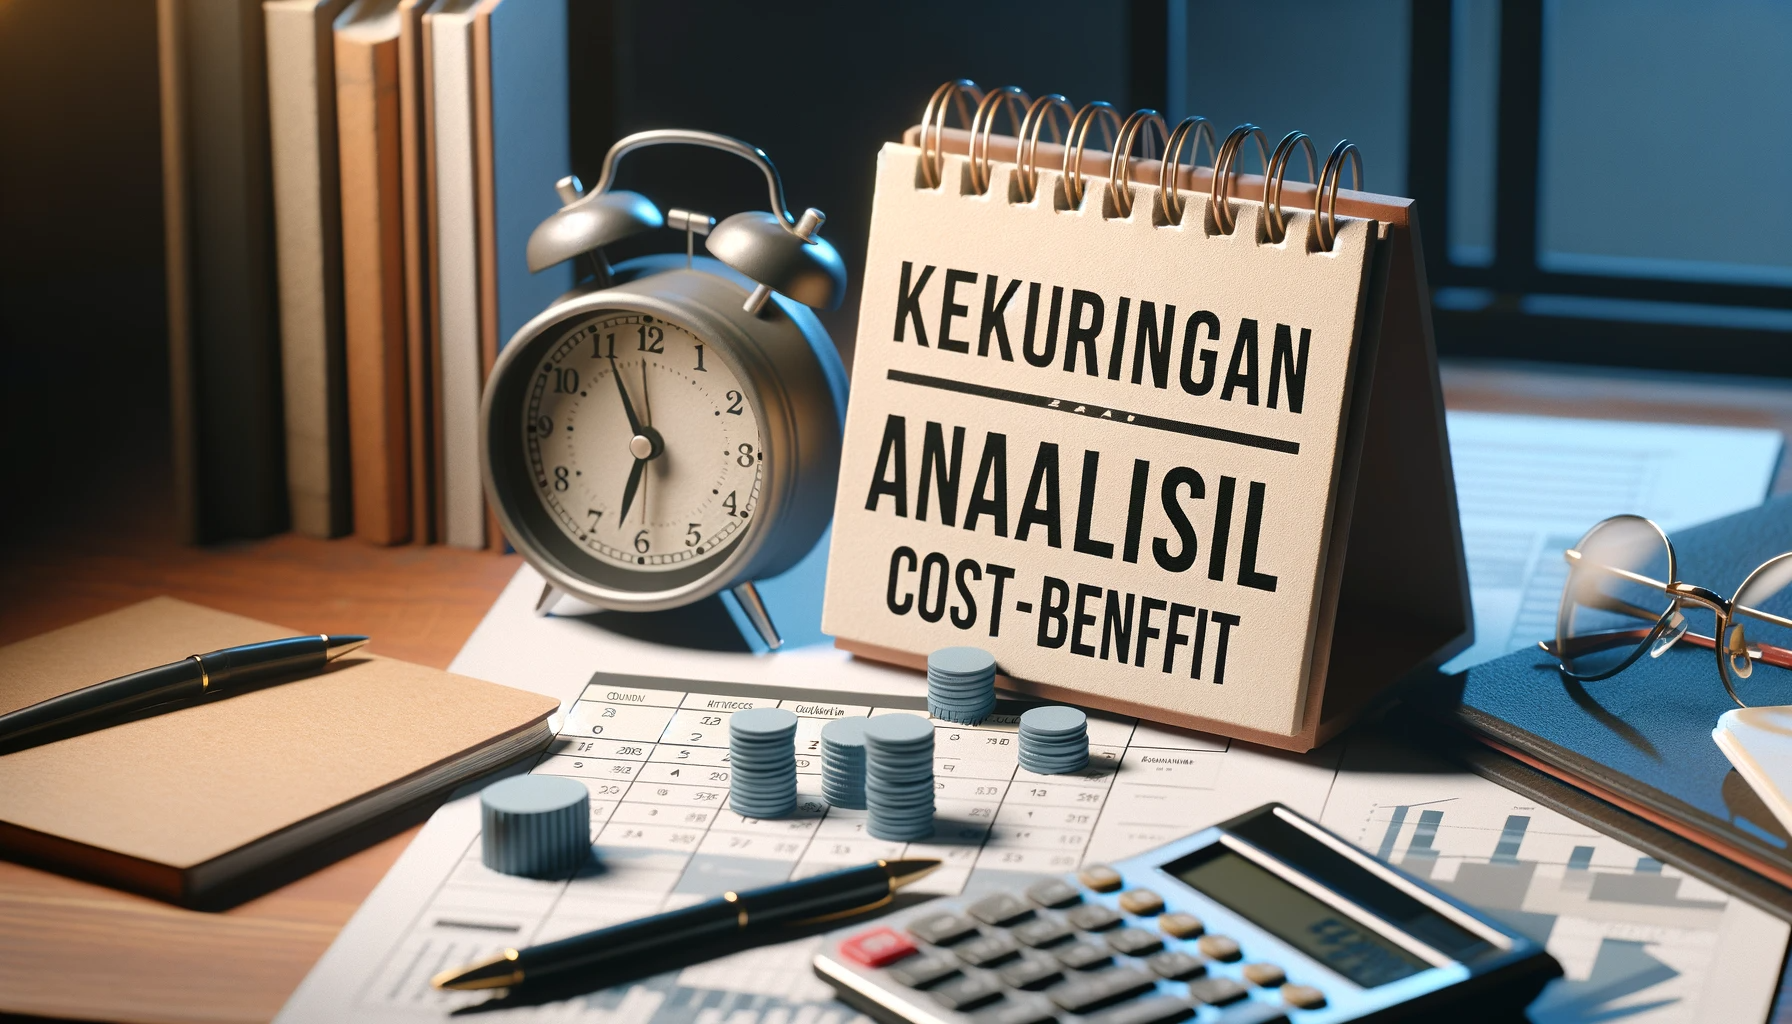 Kekurangan Analisis Cost-Benefit